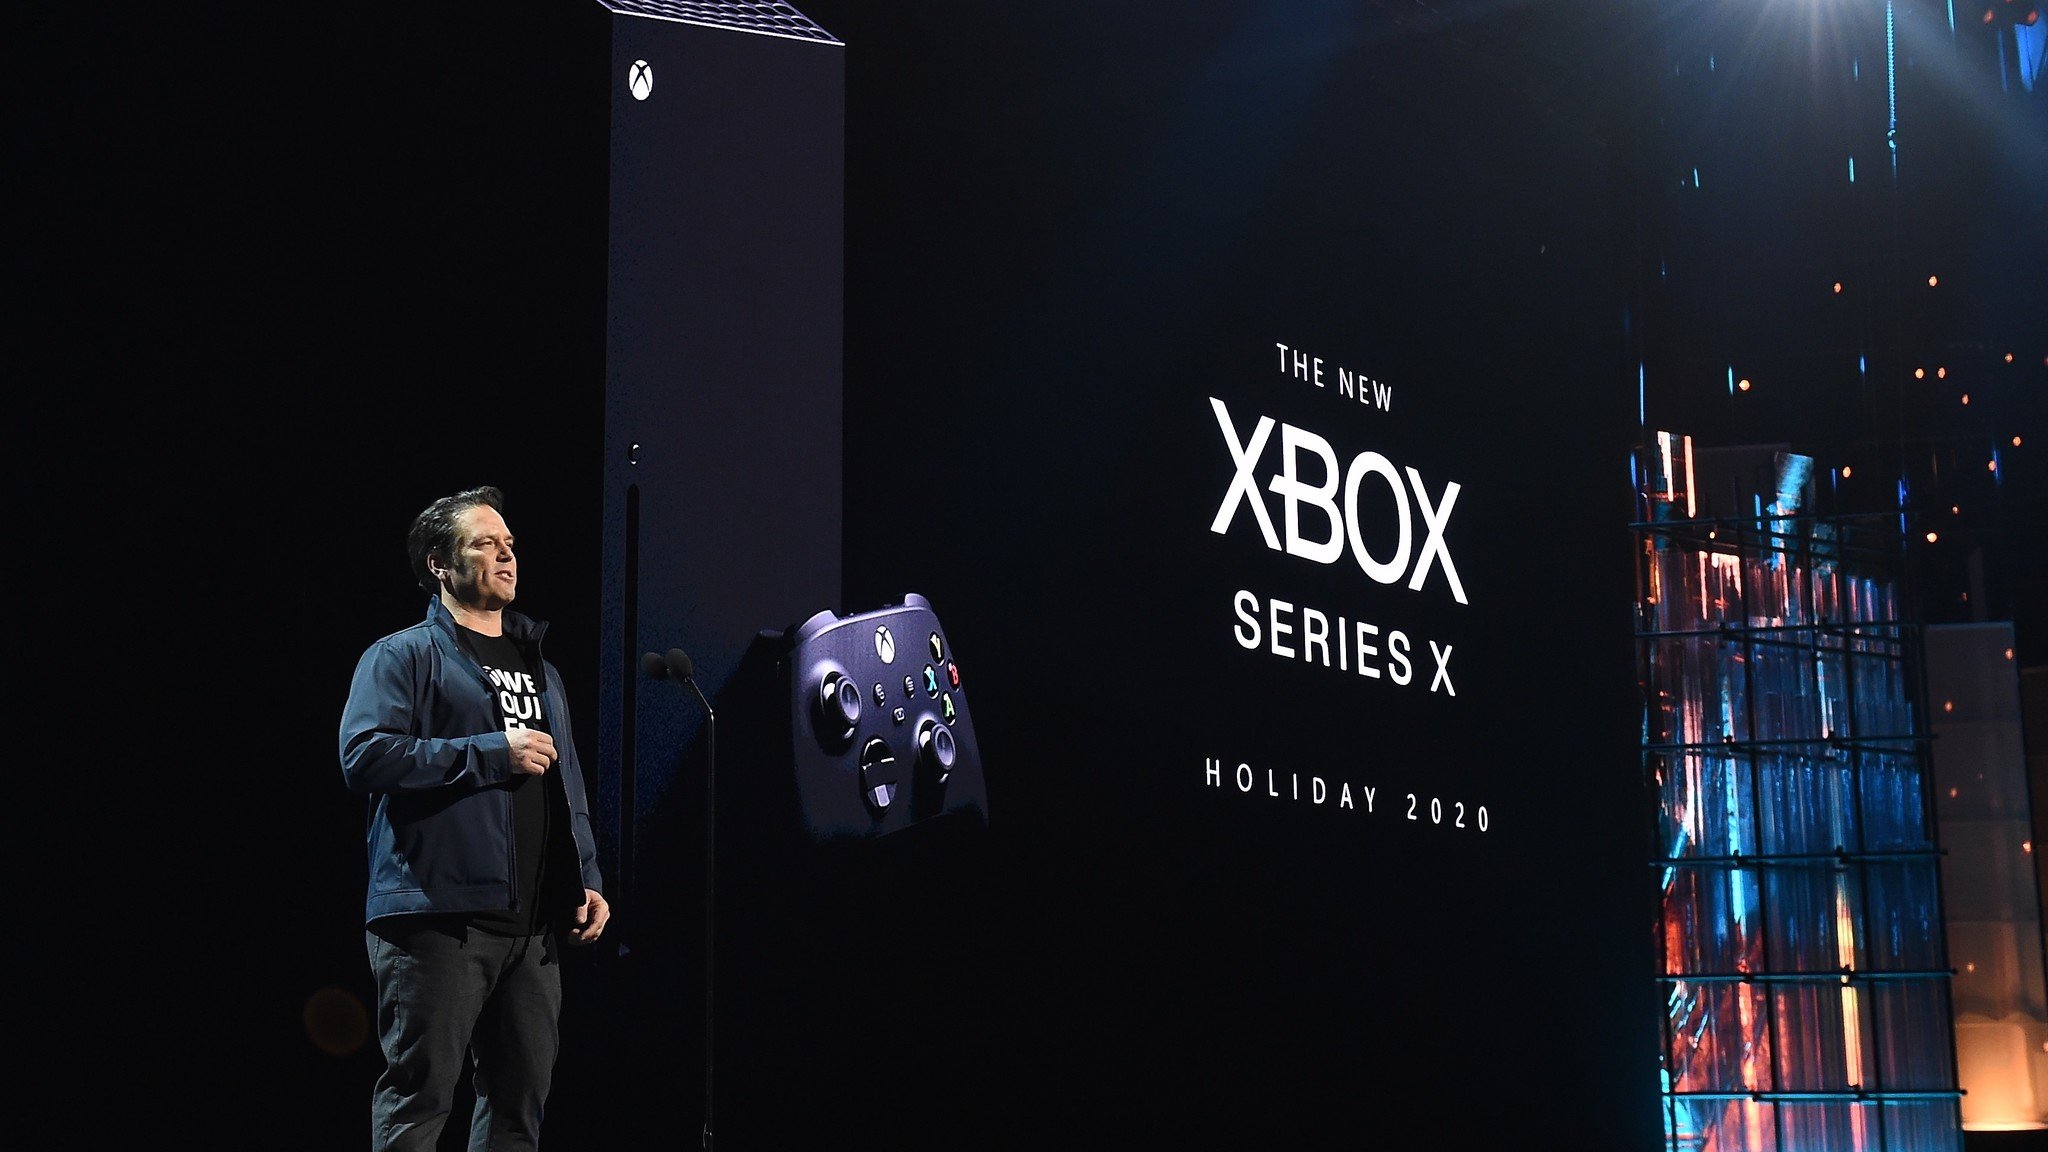 Xbox Series X Game Awards